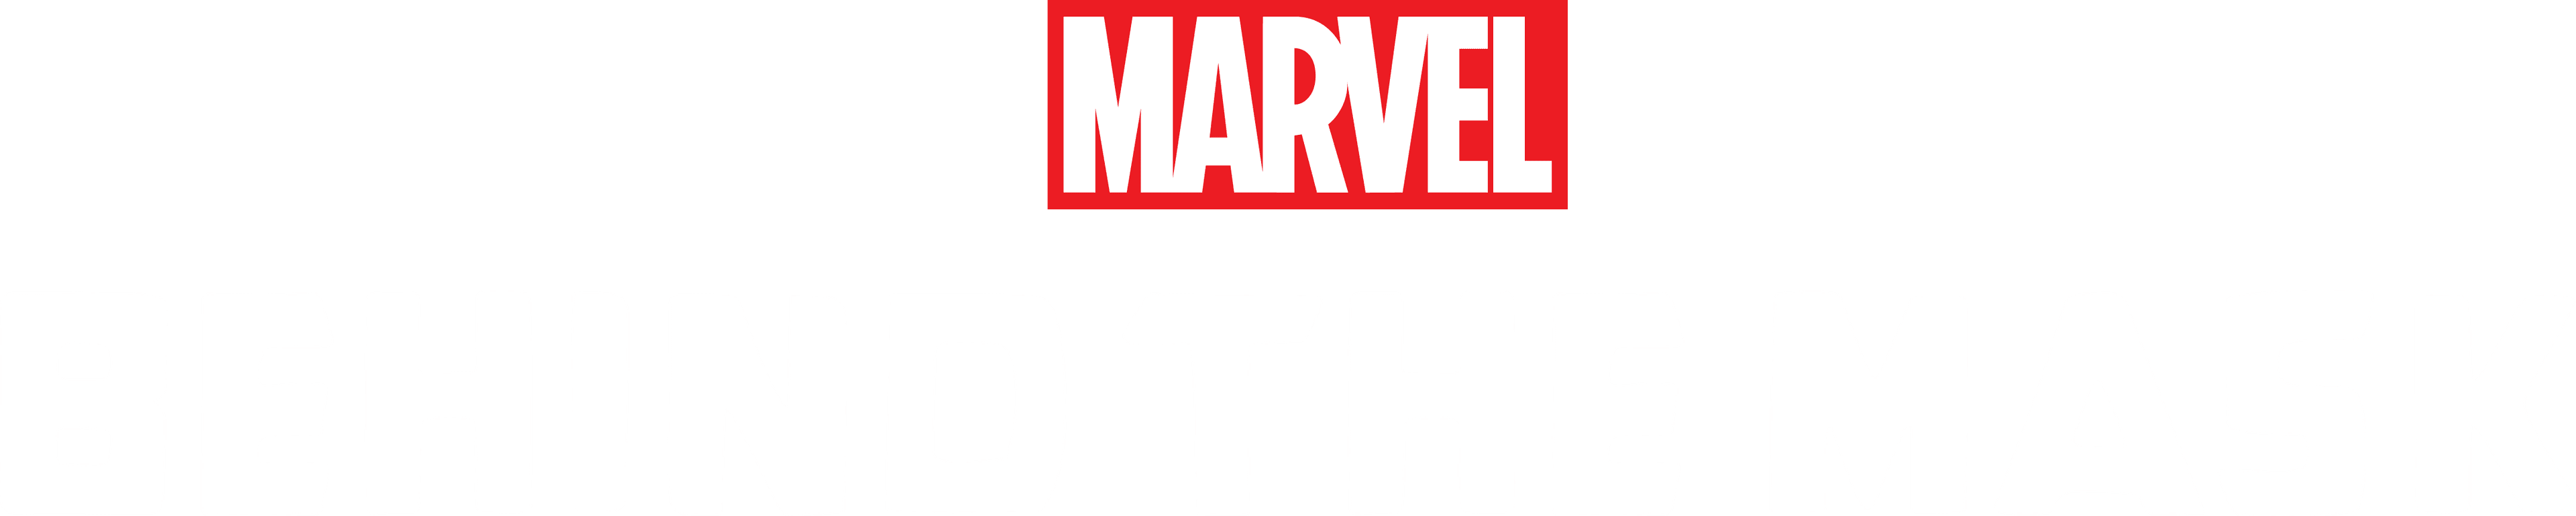 Marvel's Behind the Mask logo